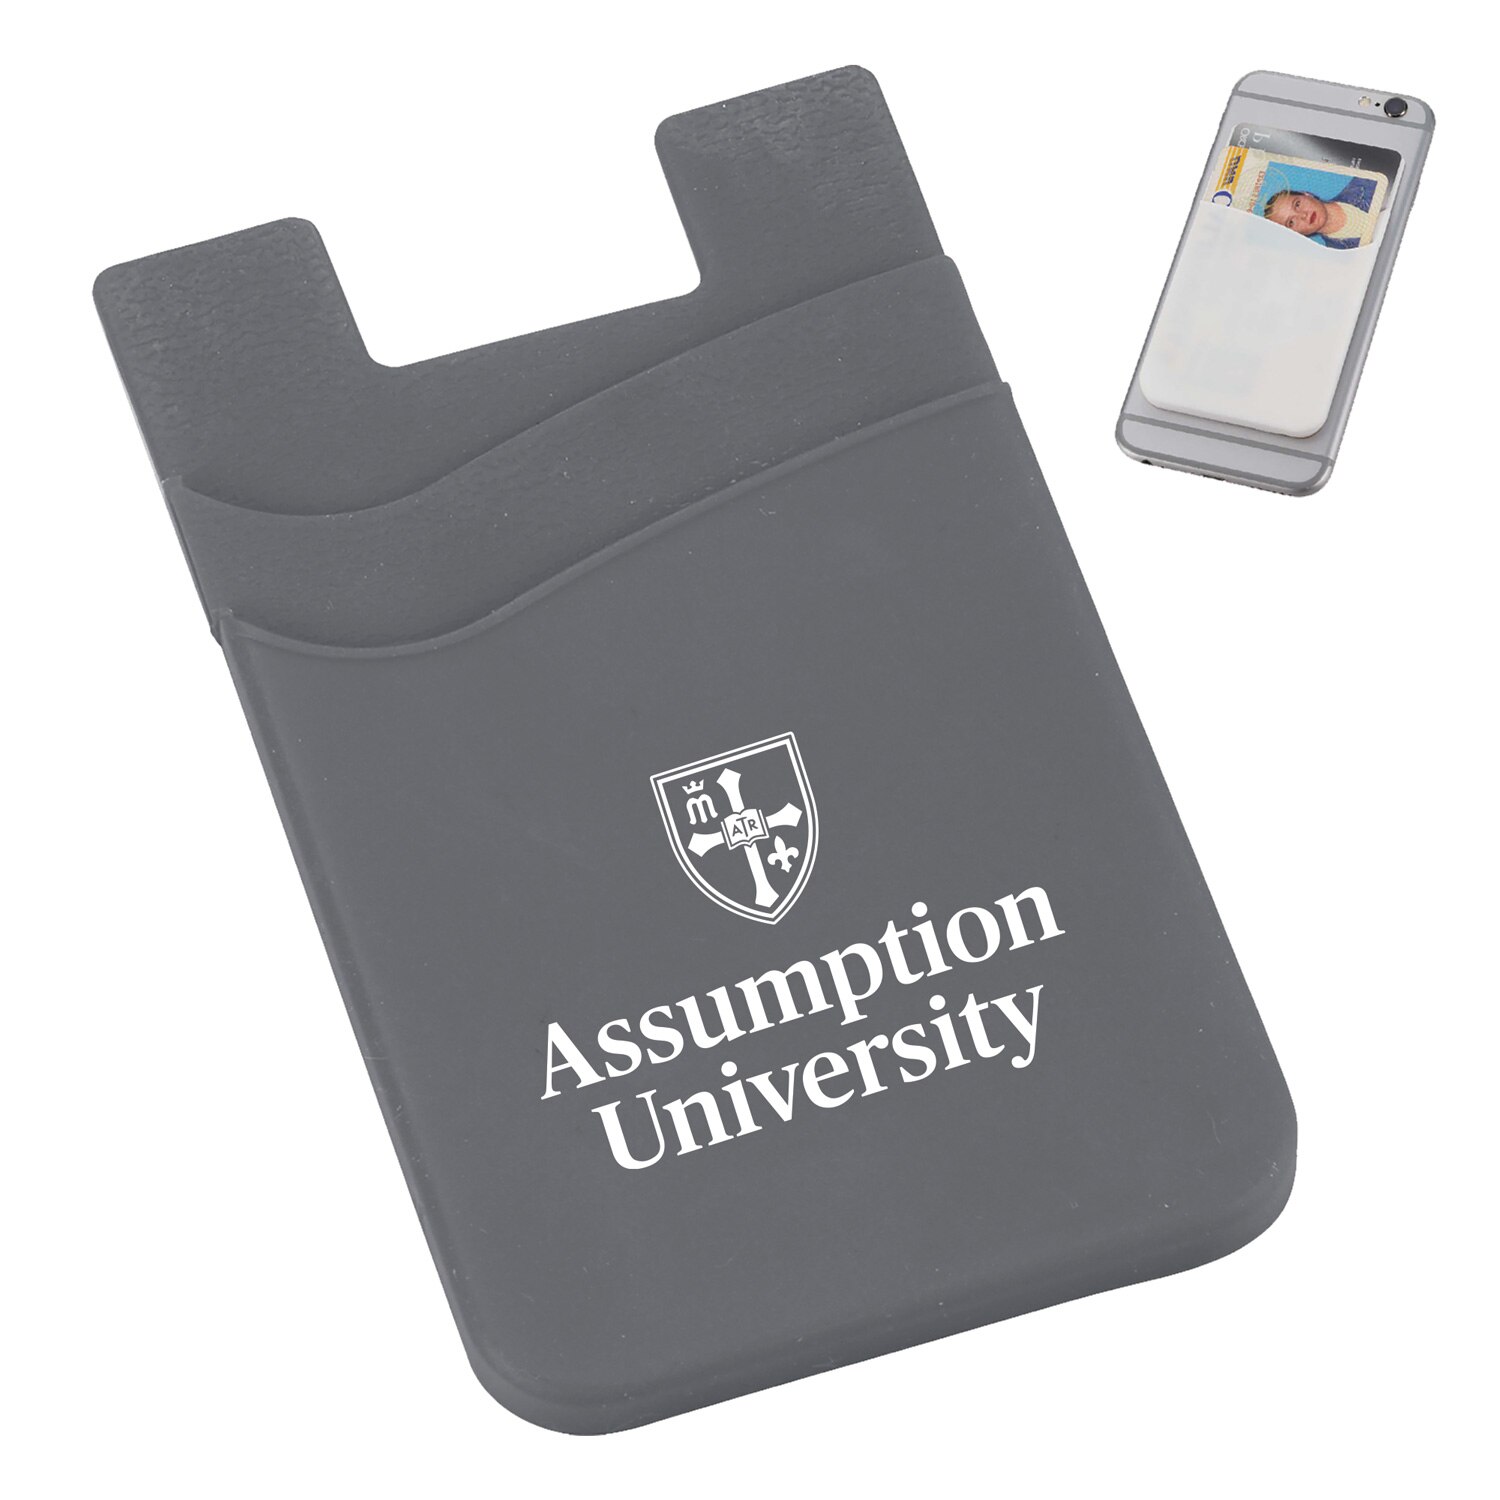 Assumption University Dual Pocket Phone Wallet